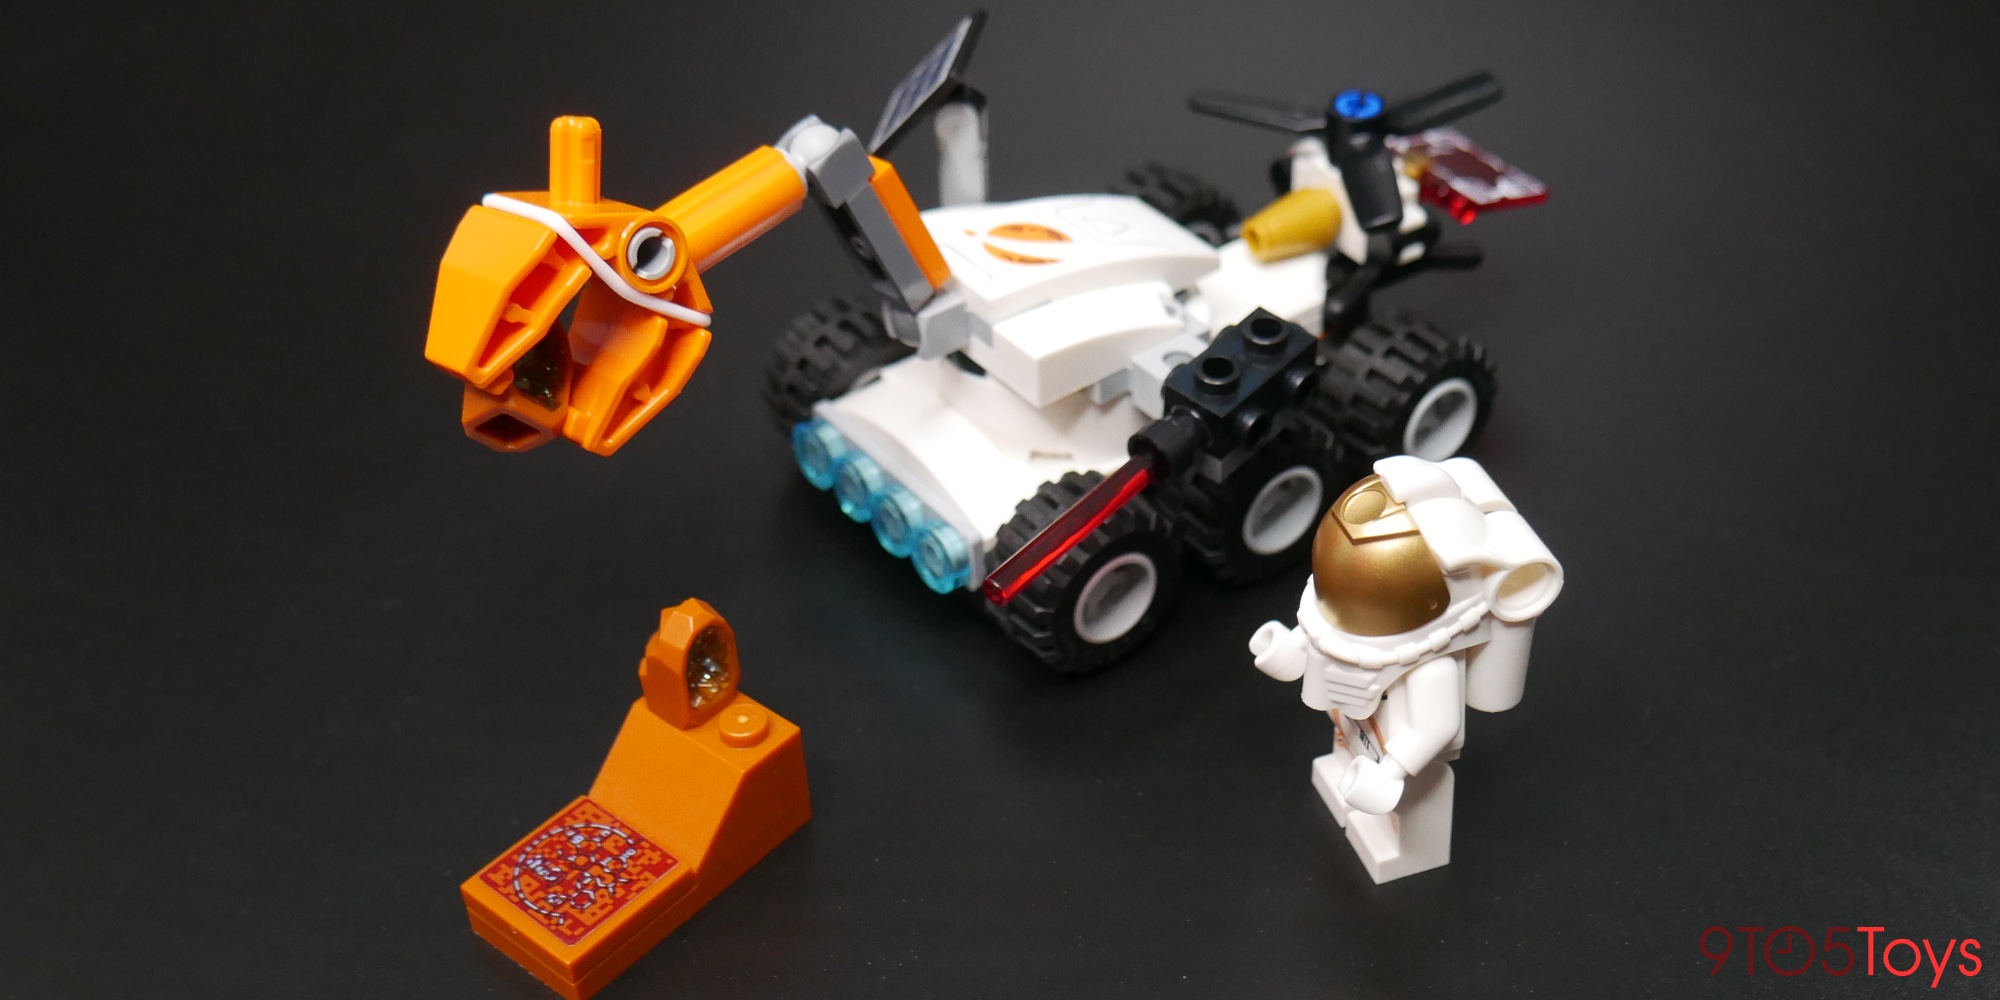 LEGO Mars Research Shuttle